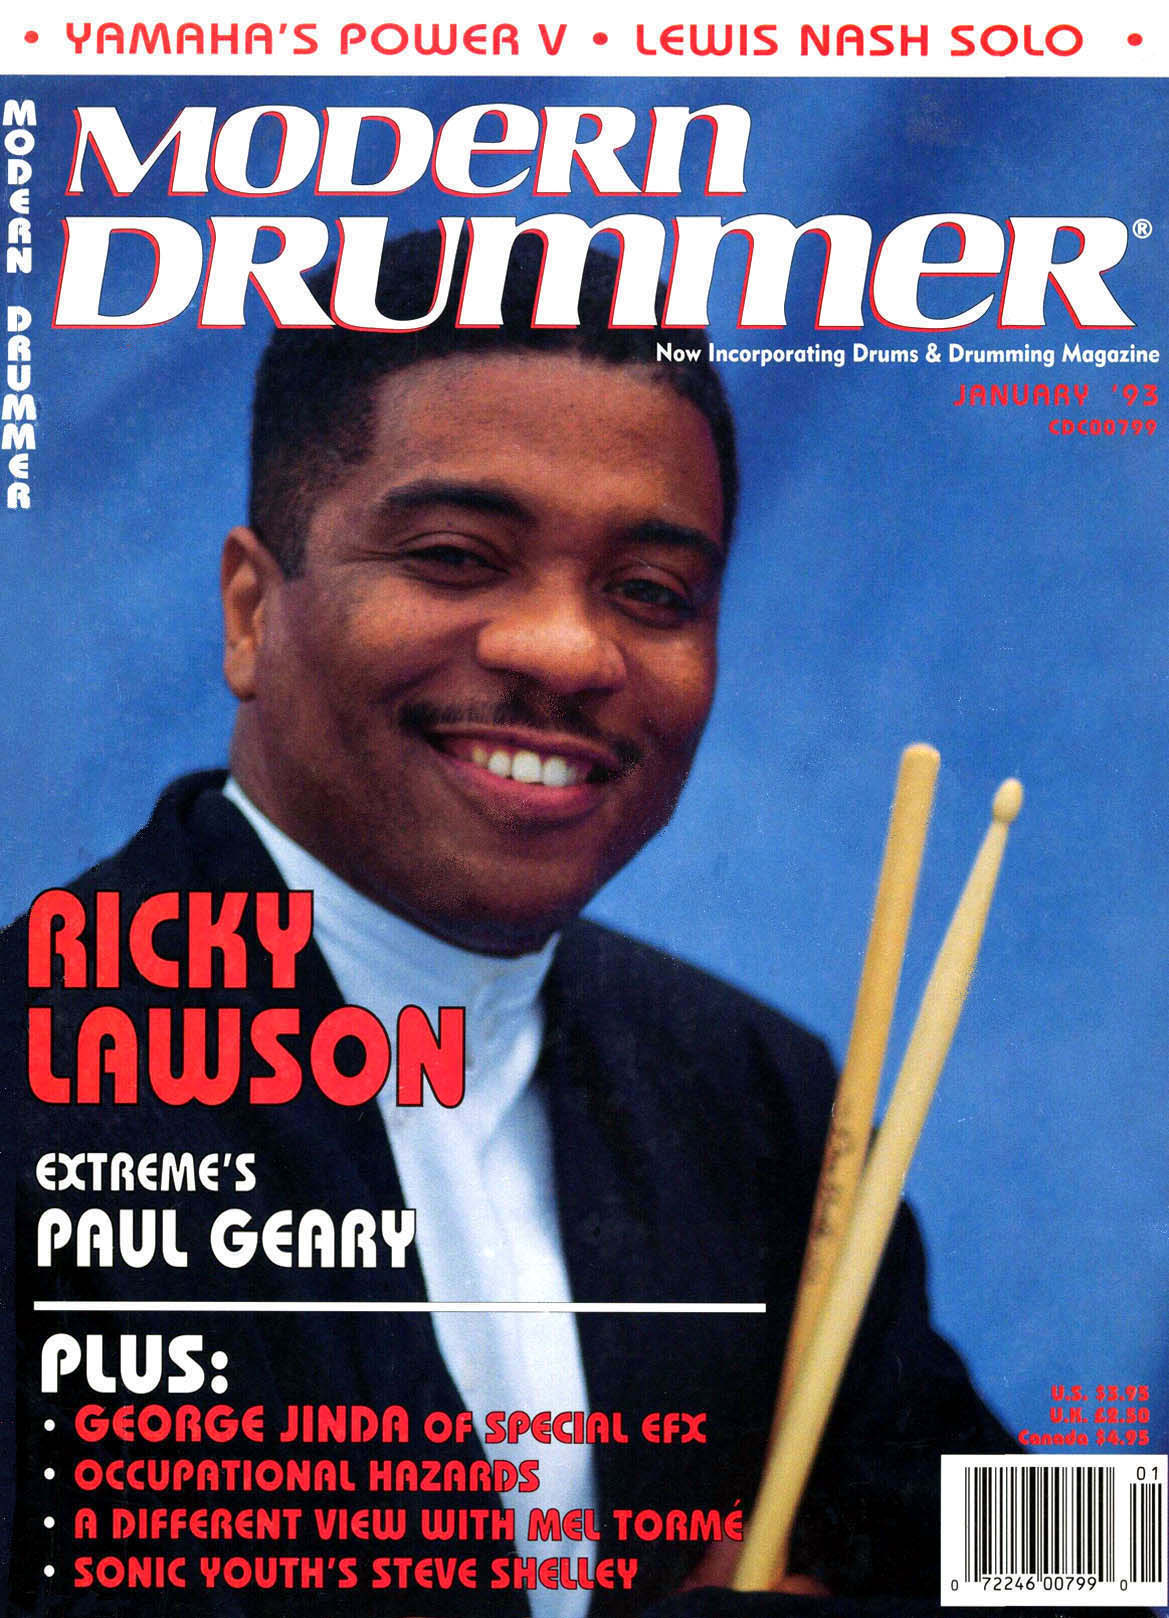 January 1993 - Volume 17 • Number 1 - Modern Drummer Magazine